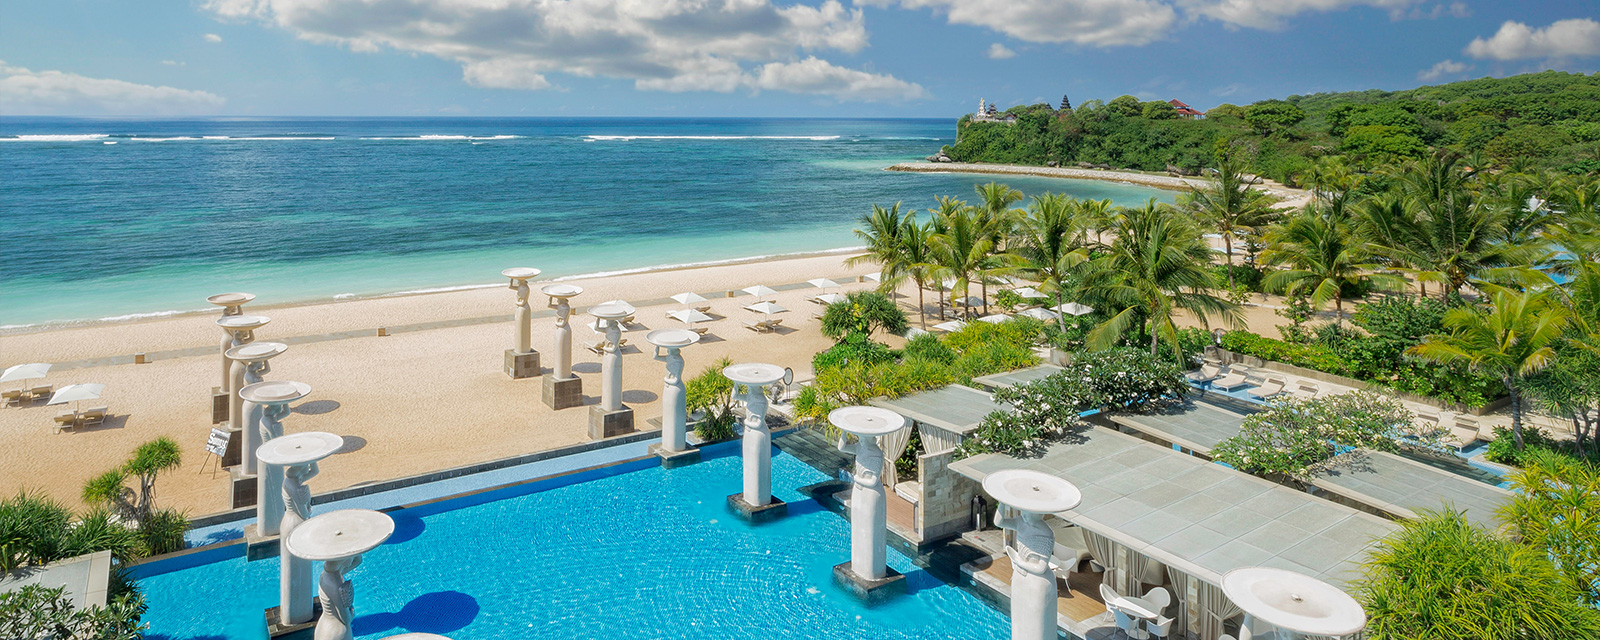 Stunning Luxury Accommodations | Mulia Resort - Nusa Dua, Bali